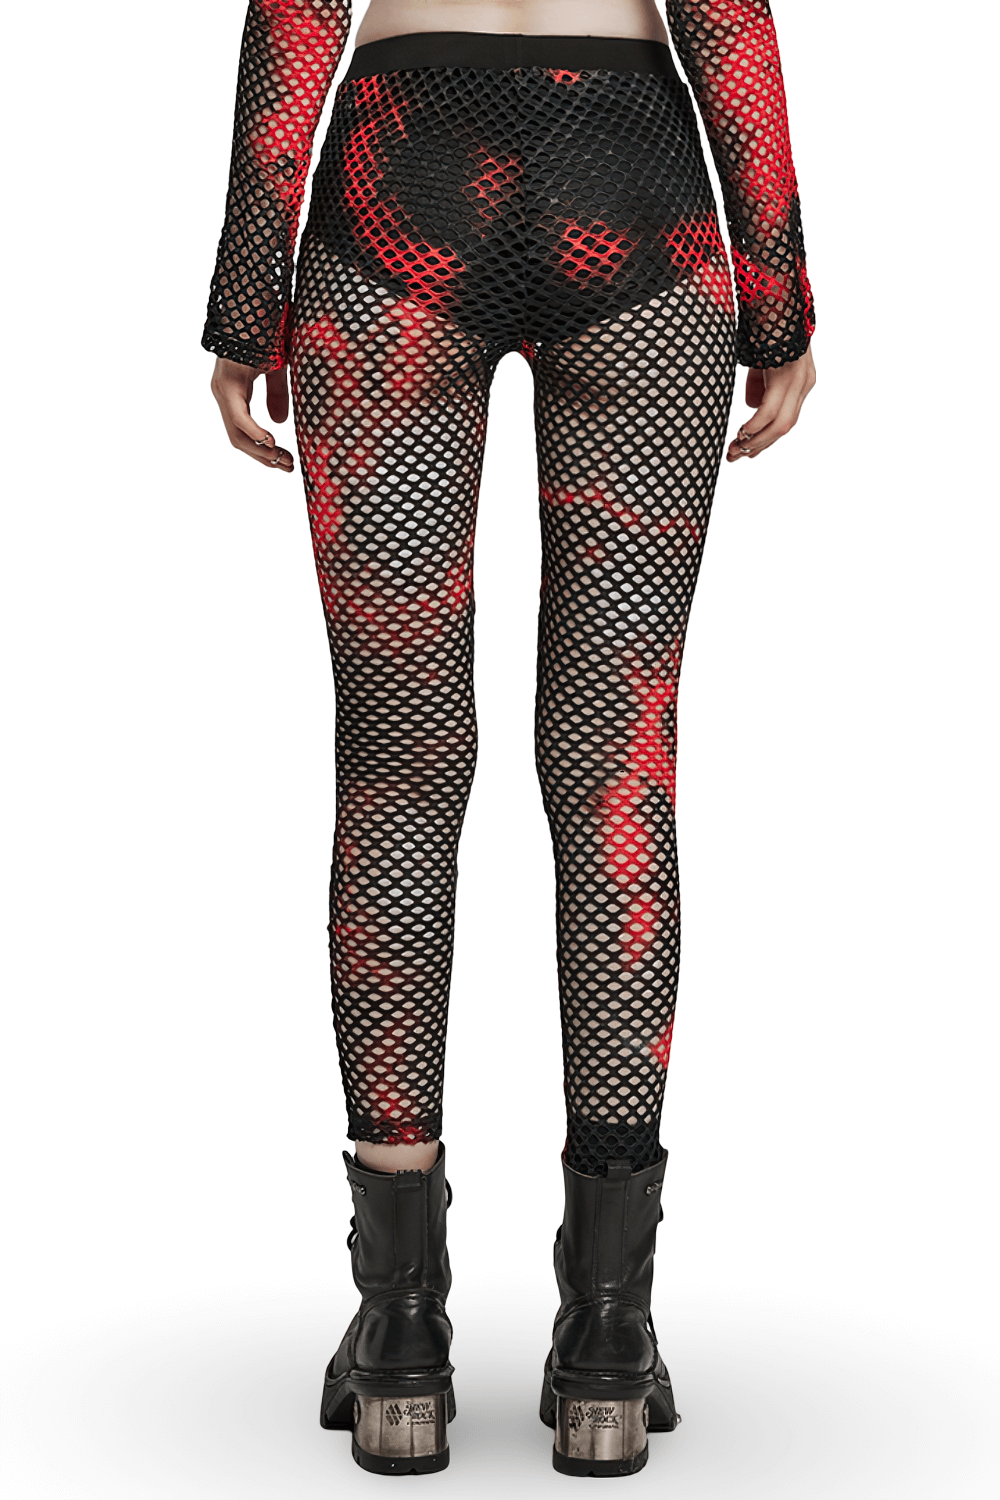 Stylish Punk Style Red-Black Fishnet Mesh Leggings